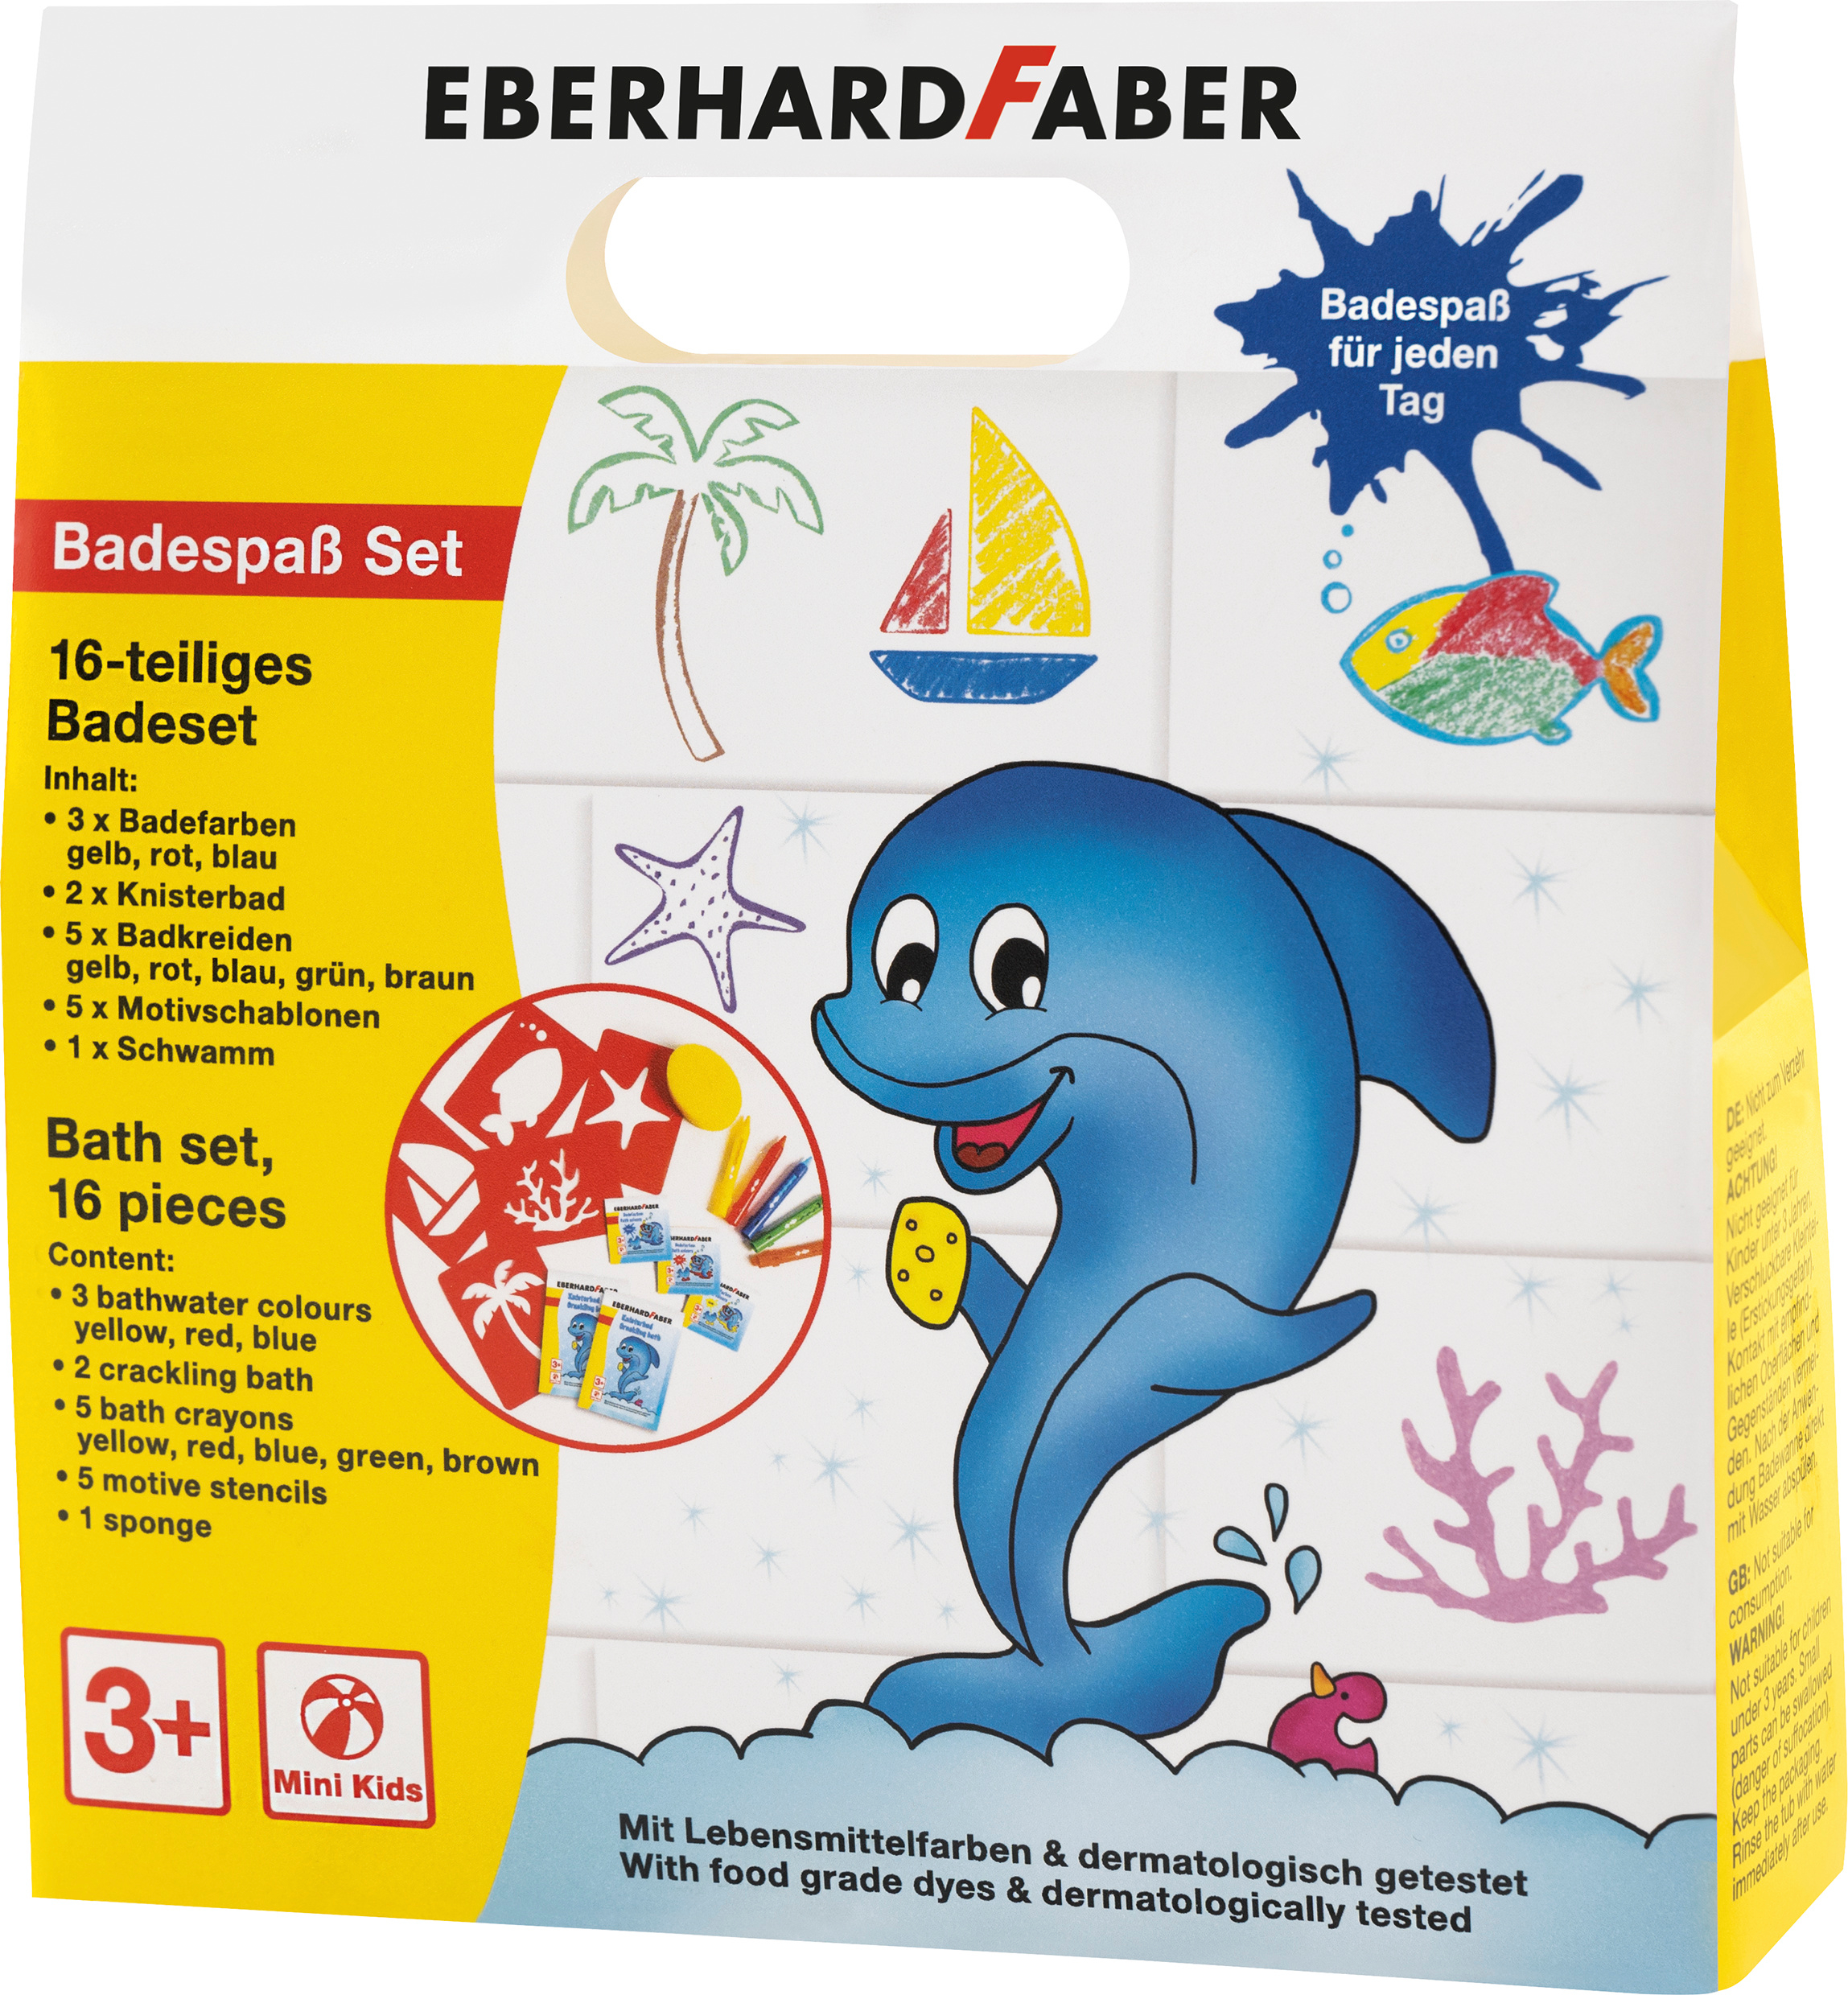 EBERHARD FABER Badespass Box 524116 5 Farben, Schablonen